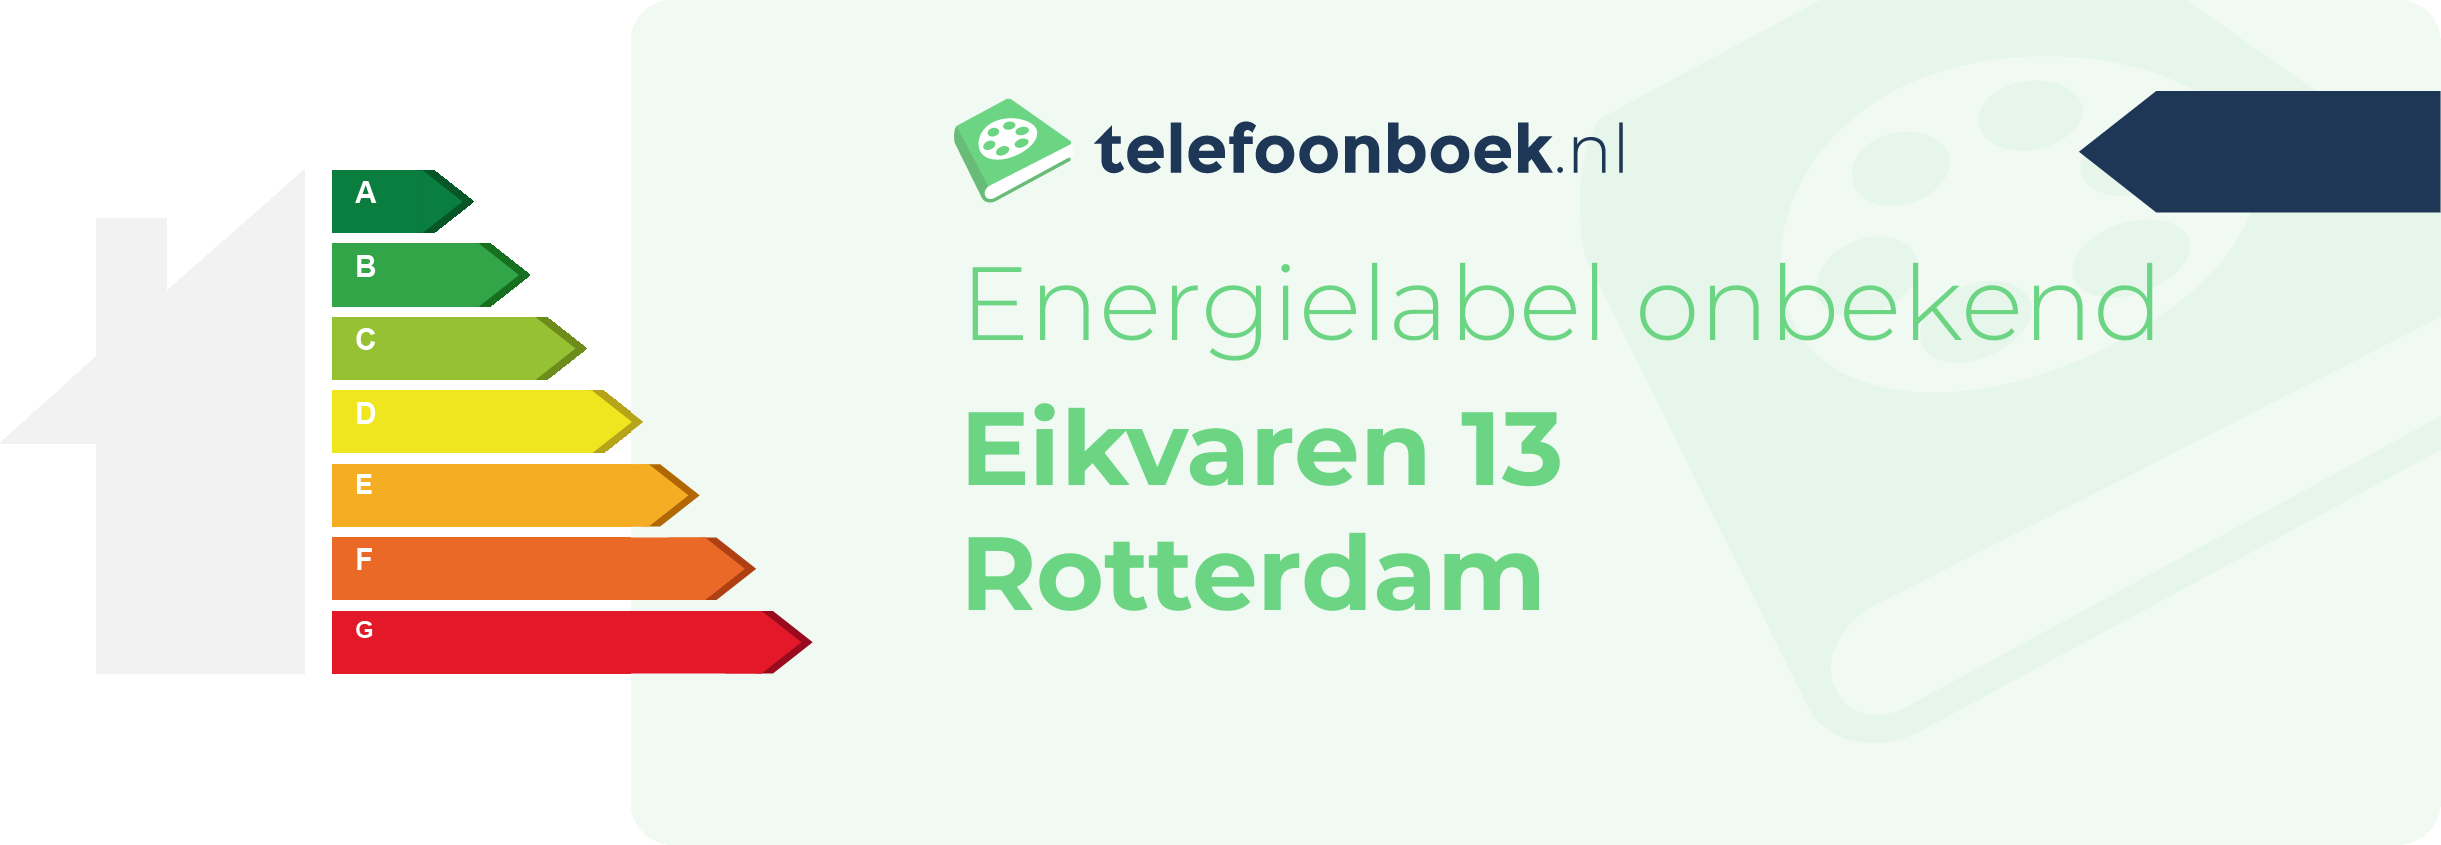 Energielabel Eikvaren 13 Rotterdam